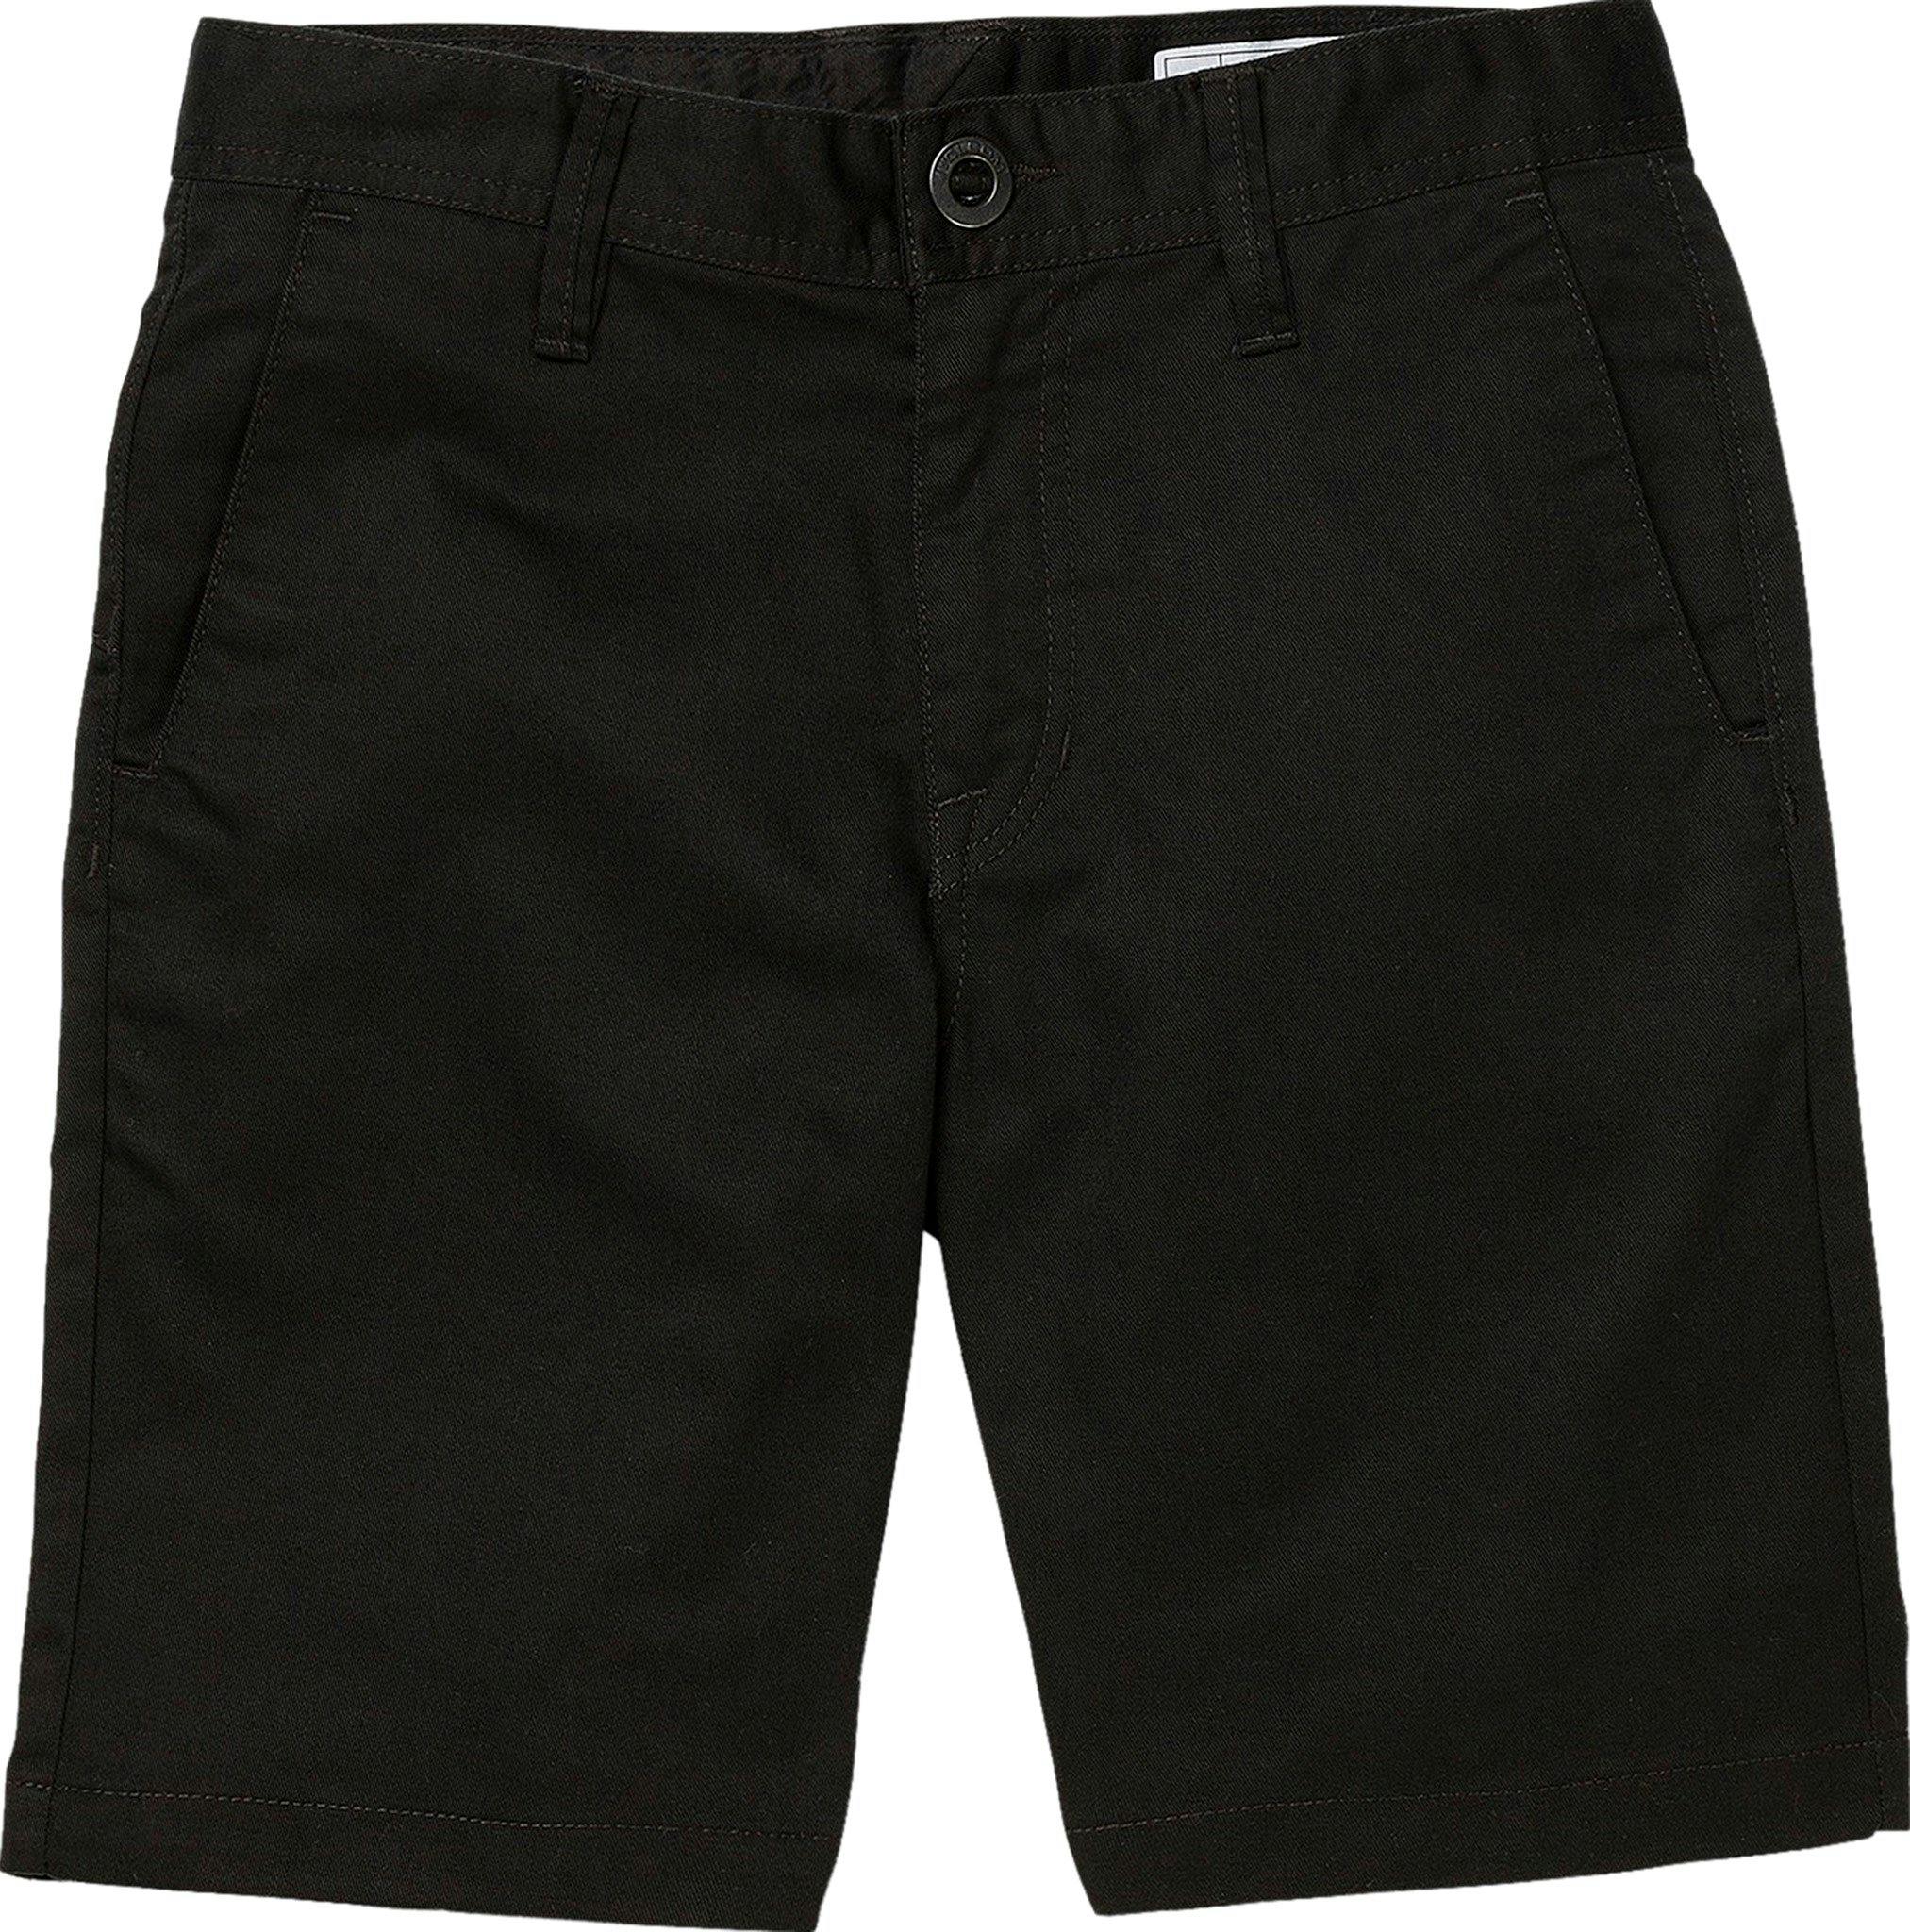 Product image for Frickin Chino Shorts - Big Boys